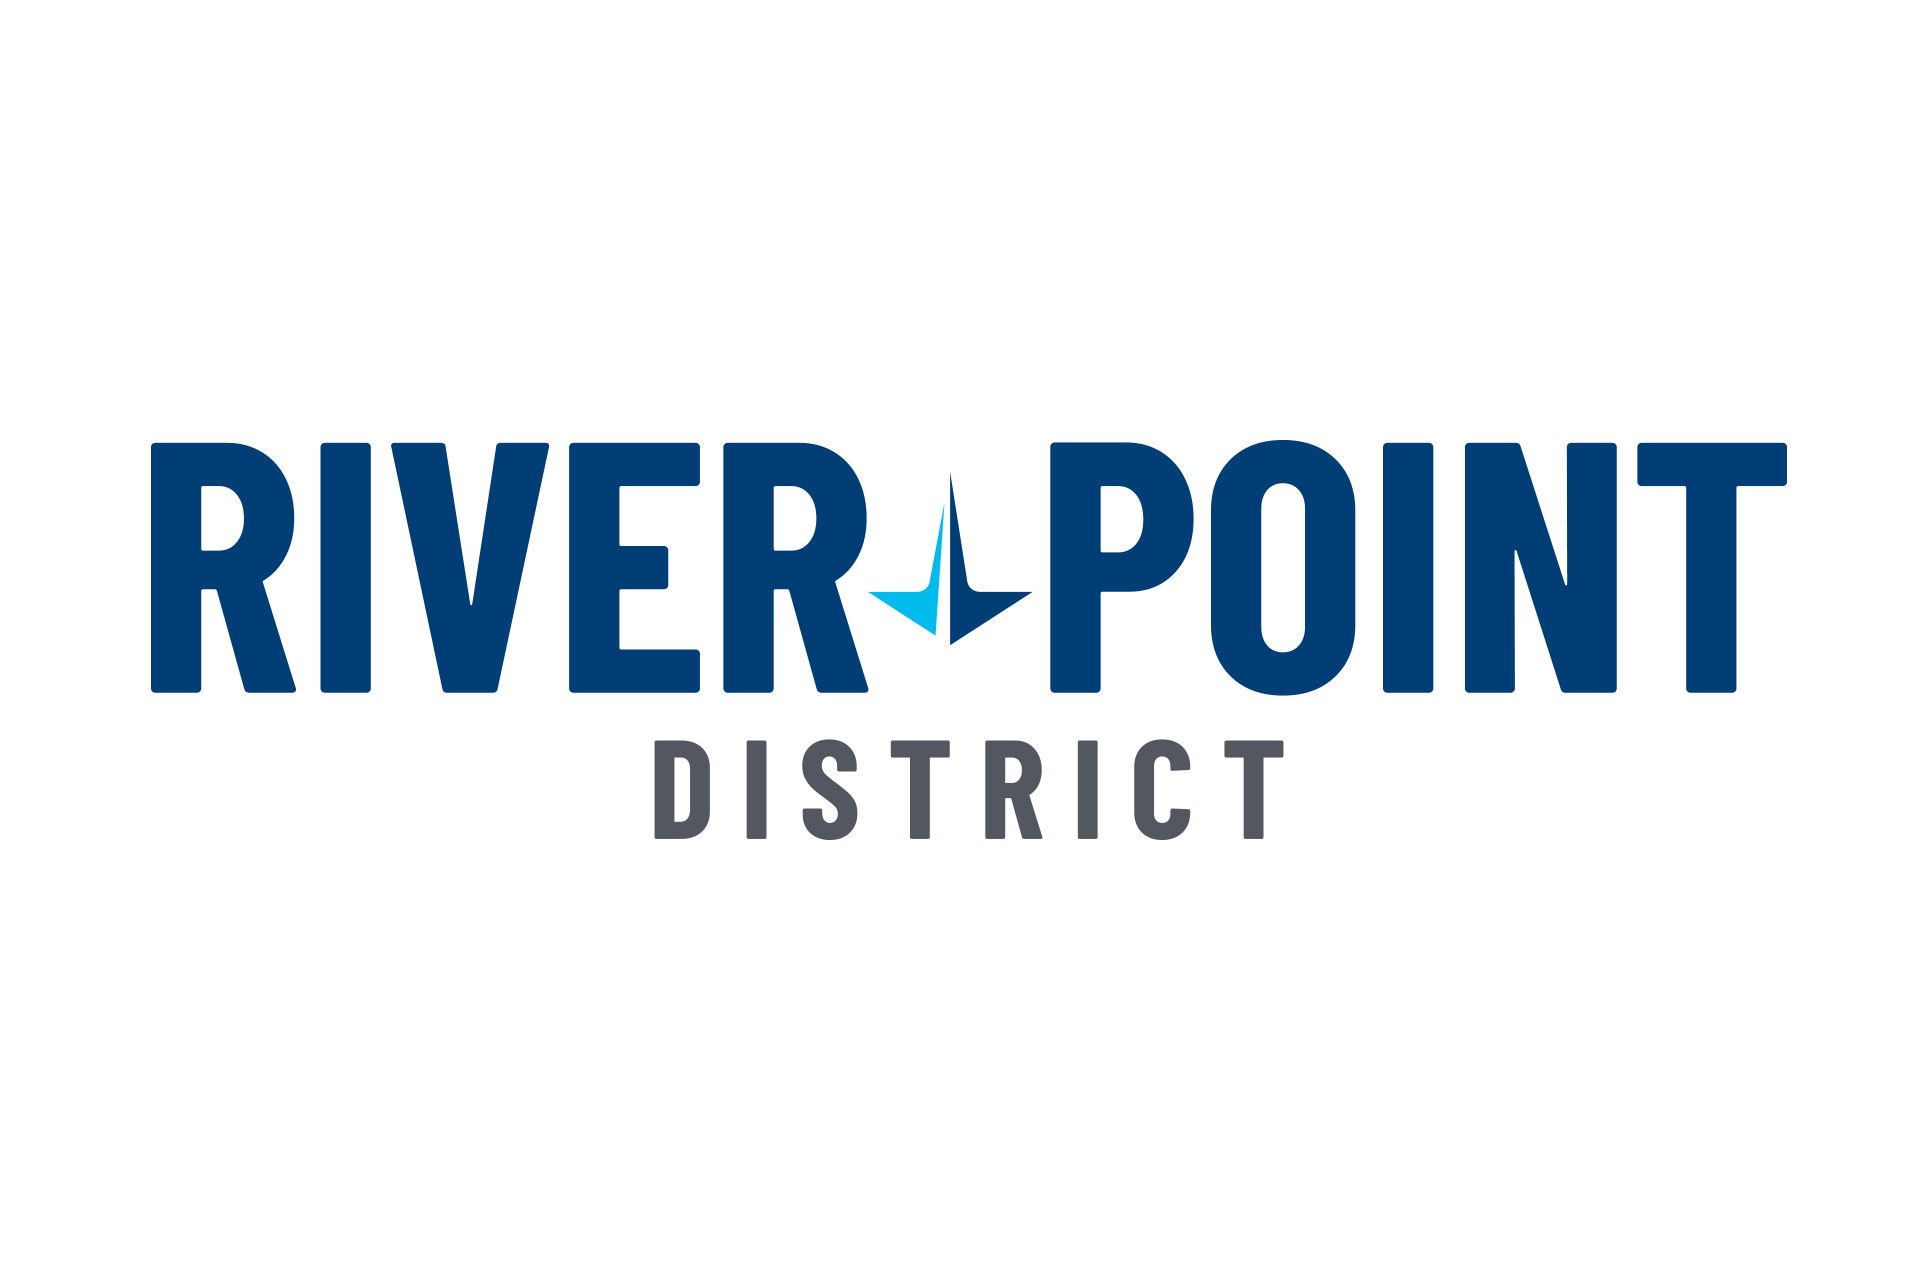 River Point District logo